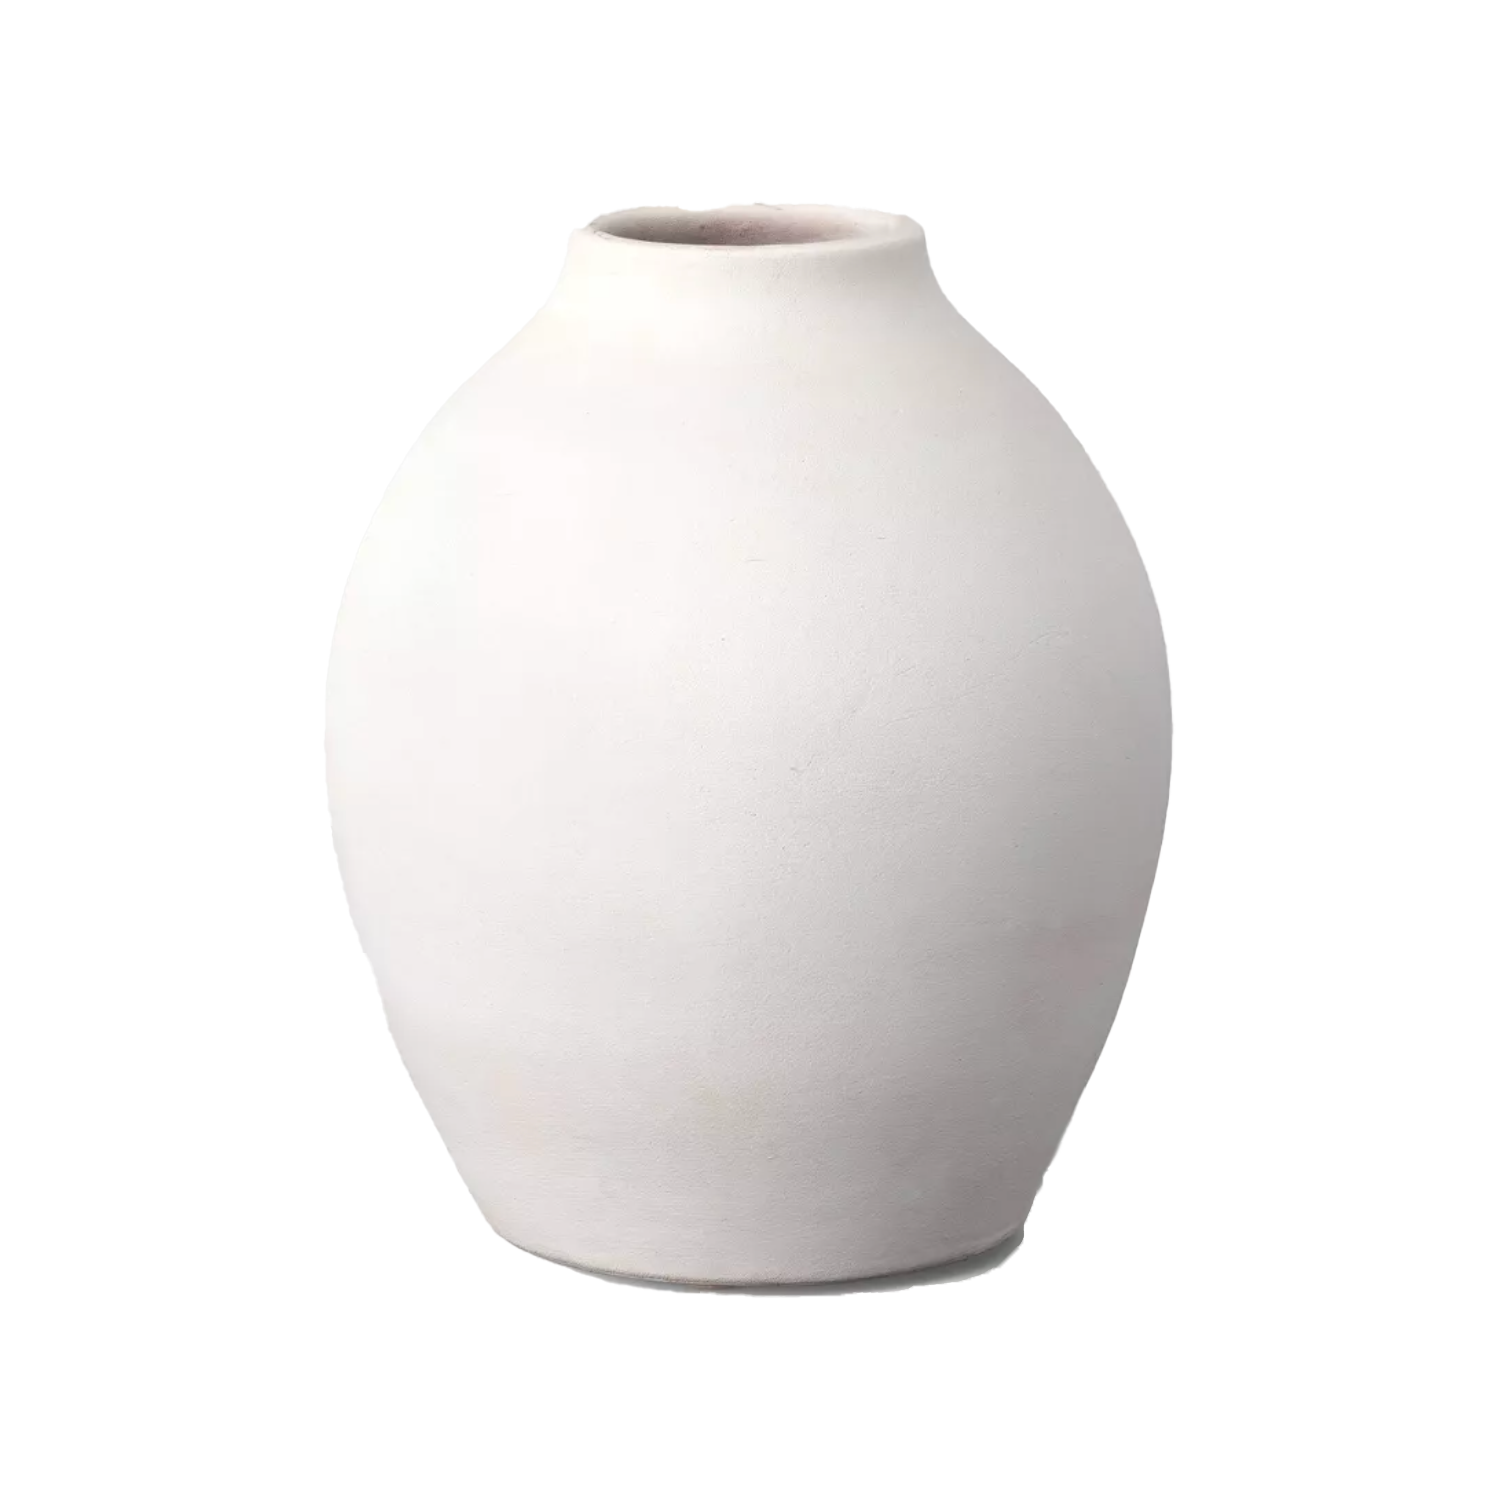 white ceramic vase from threhold